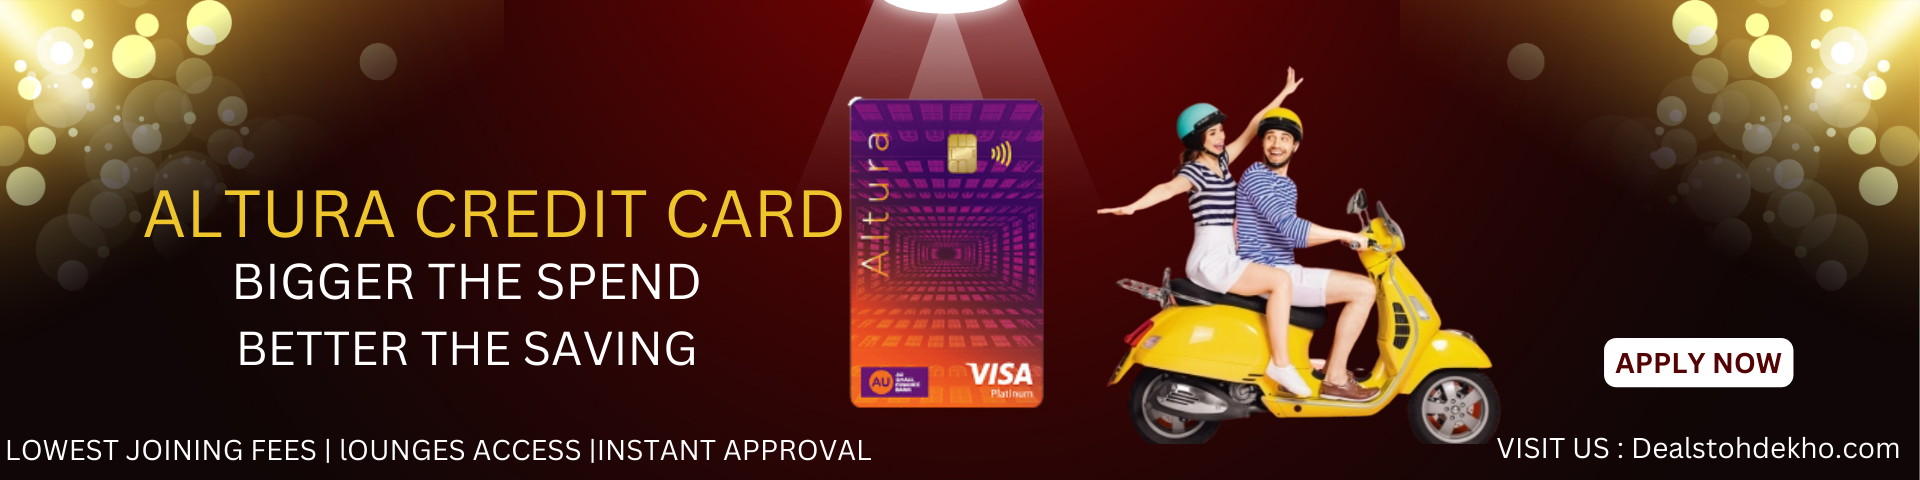 Altura Credit Card banner